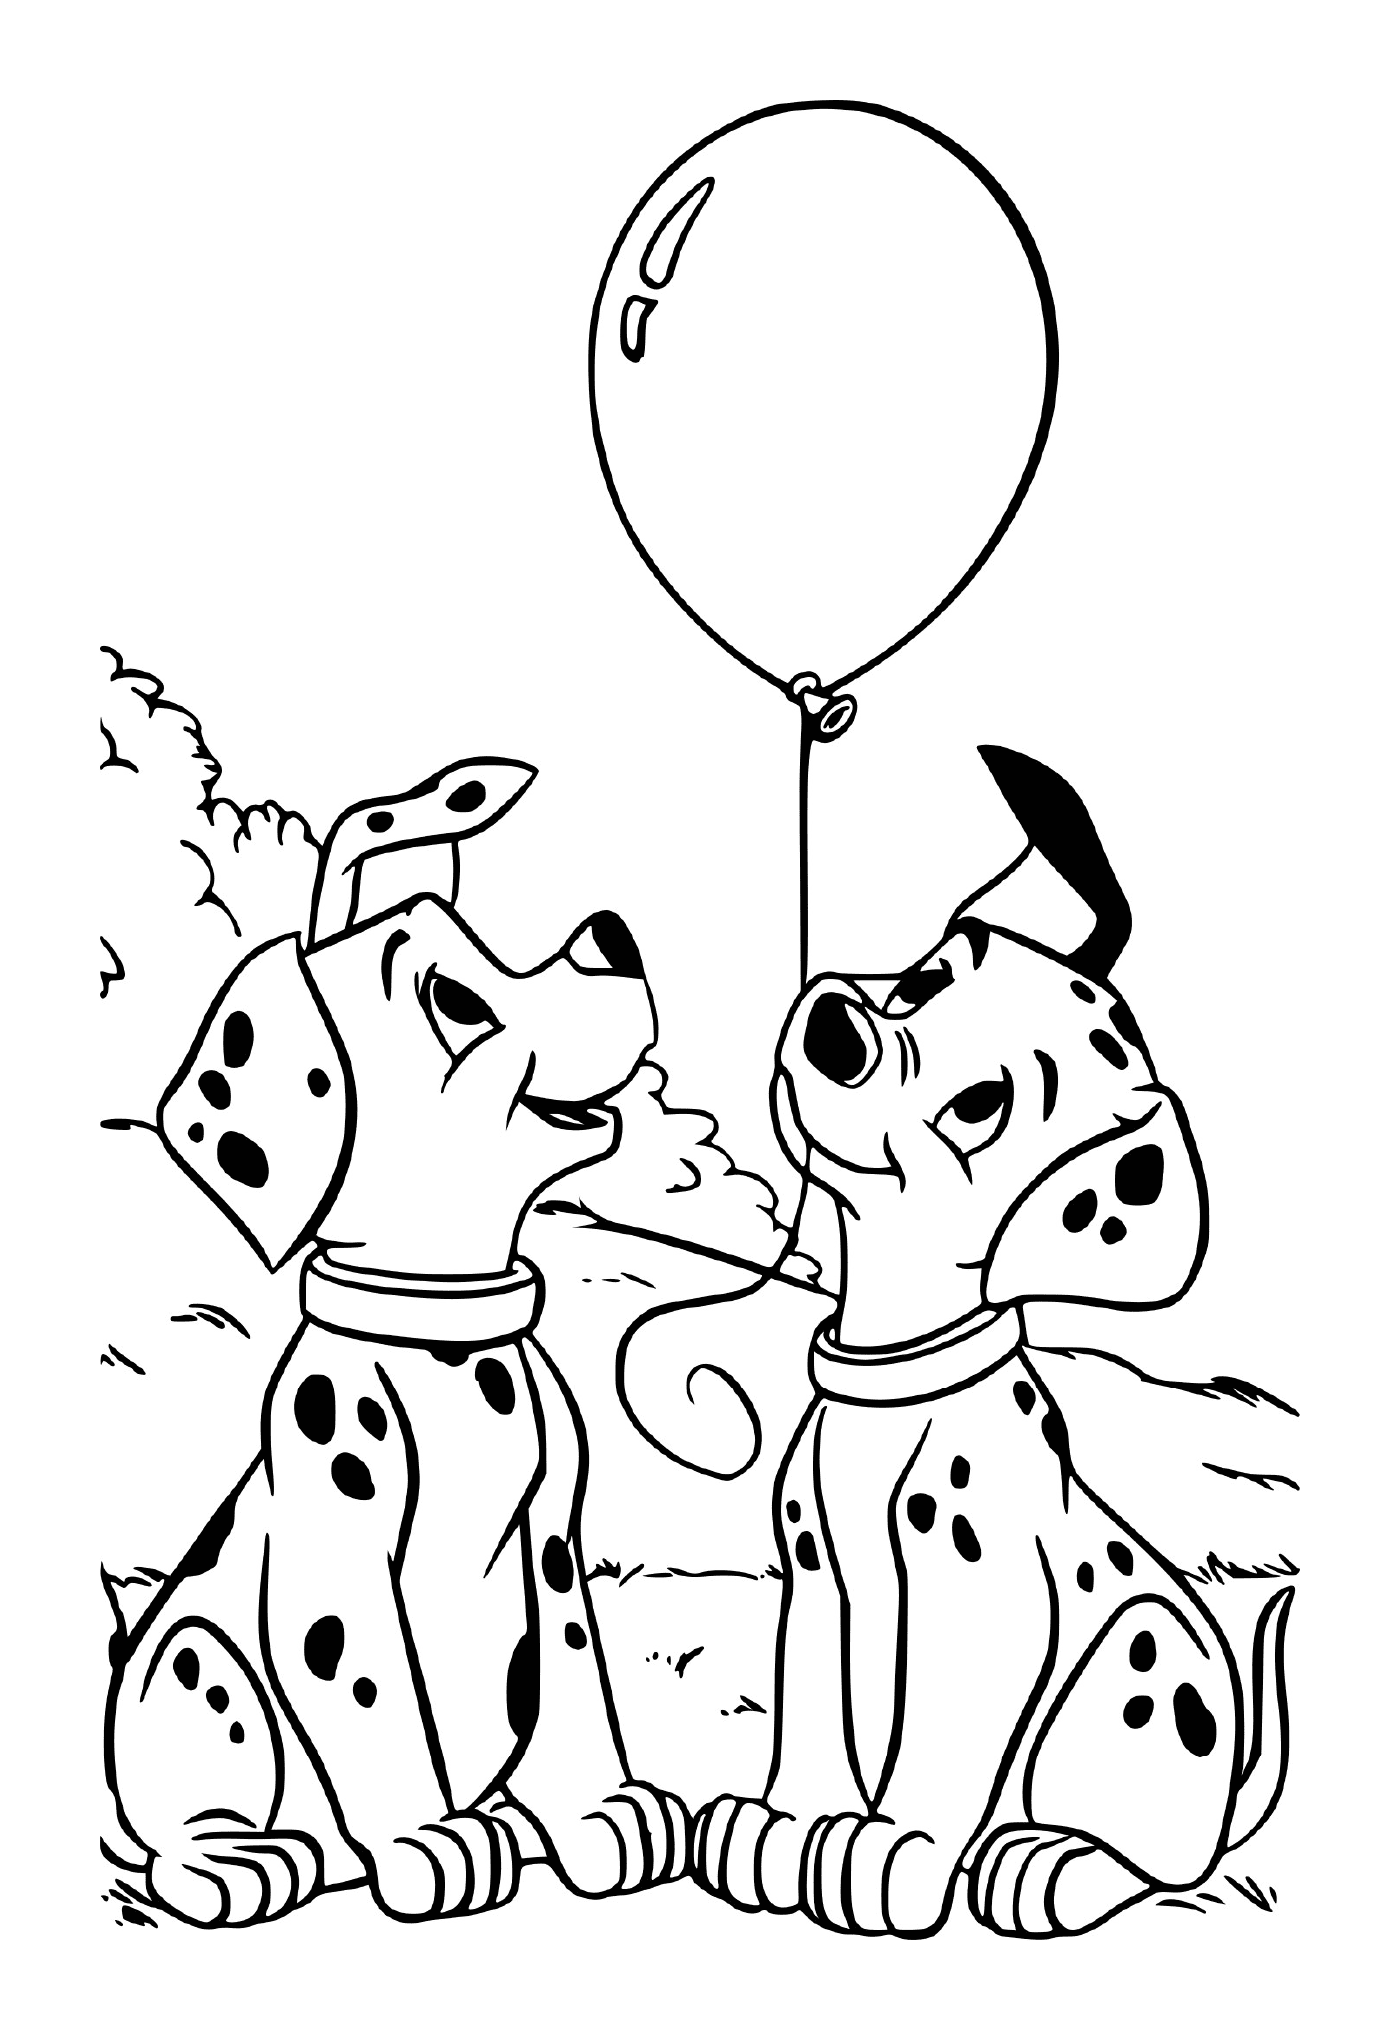  Zwei Dalmatiner beobachten einen Ballon 